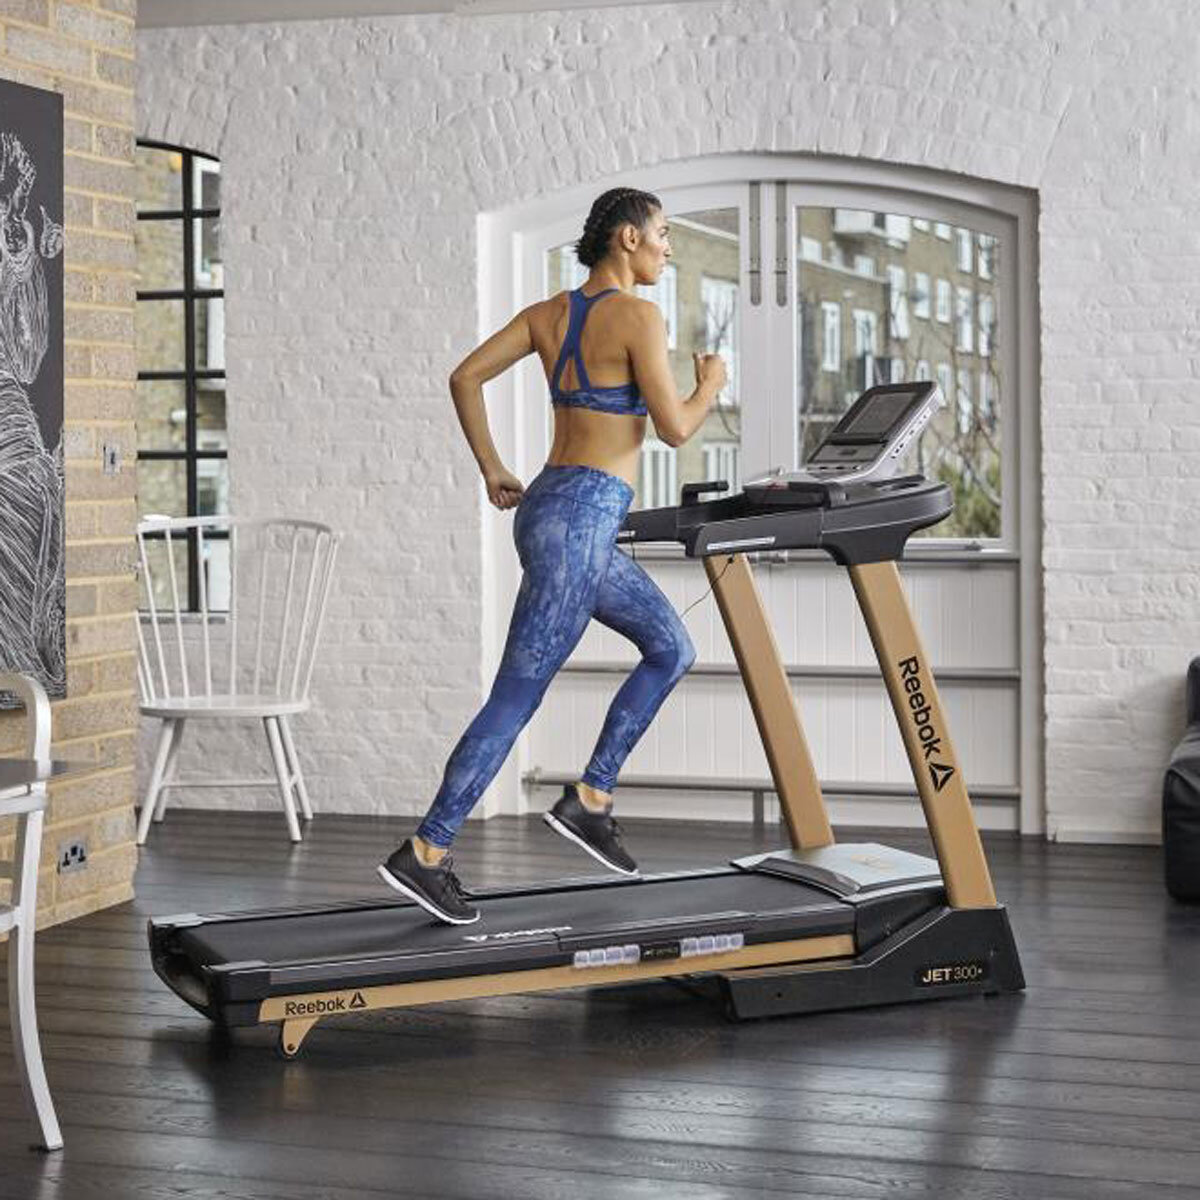 punktum Samler blade Torden Reebok Jet 300+ Treadmill - Delivery Only | Costco UK